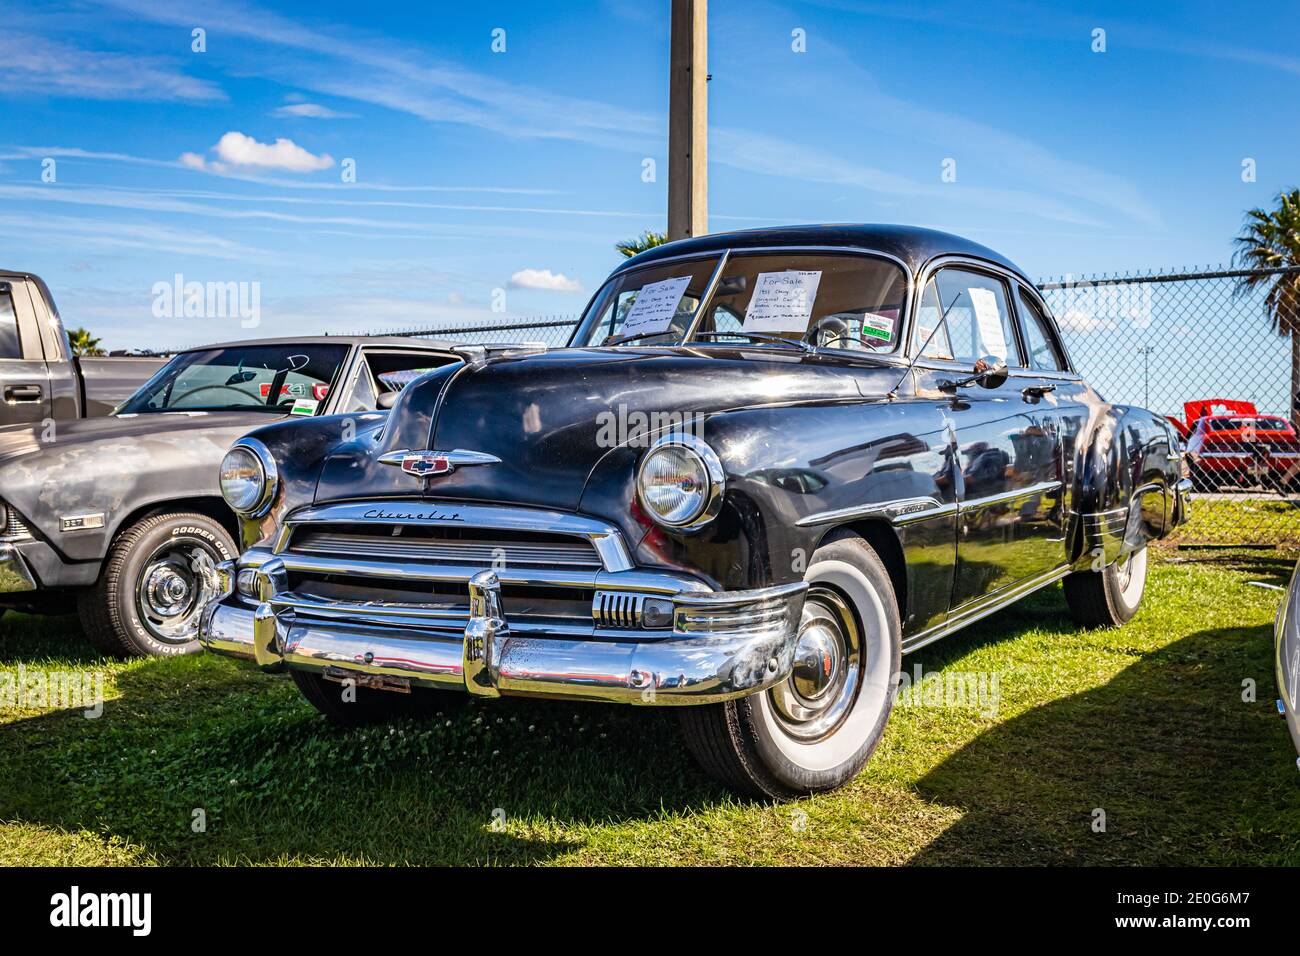 Daytona Beach, FL - November 28, 2020: 1951 Chevrolet DeLuxe at a local car show. Stock Photo